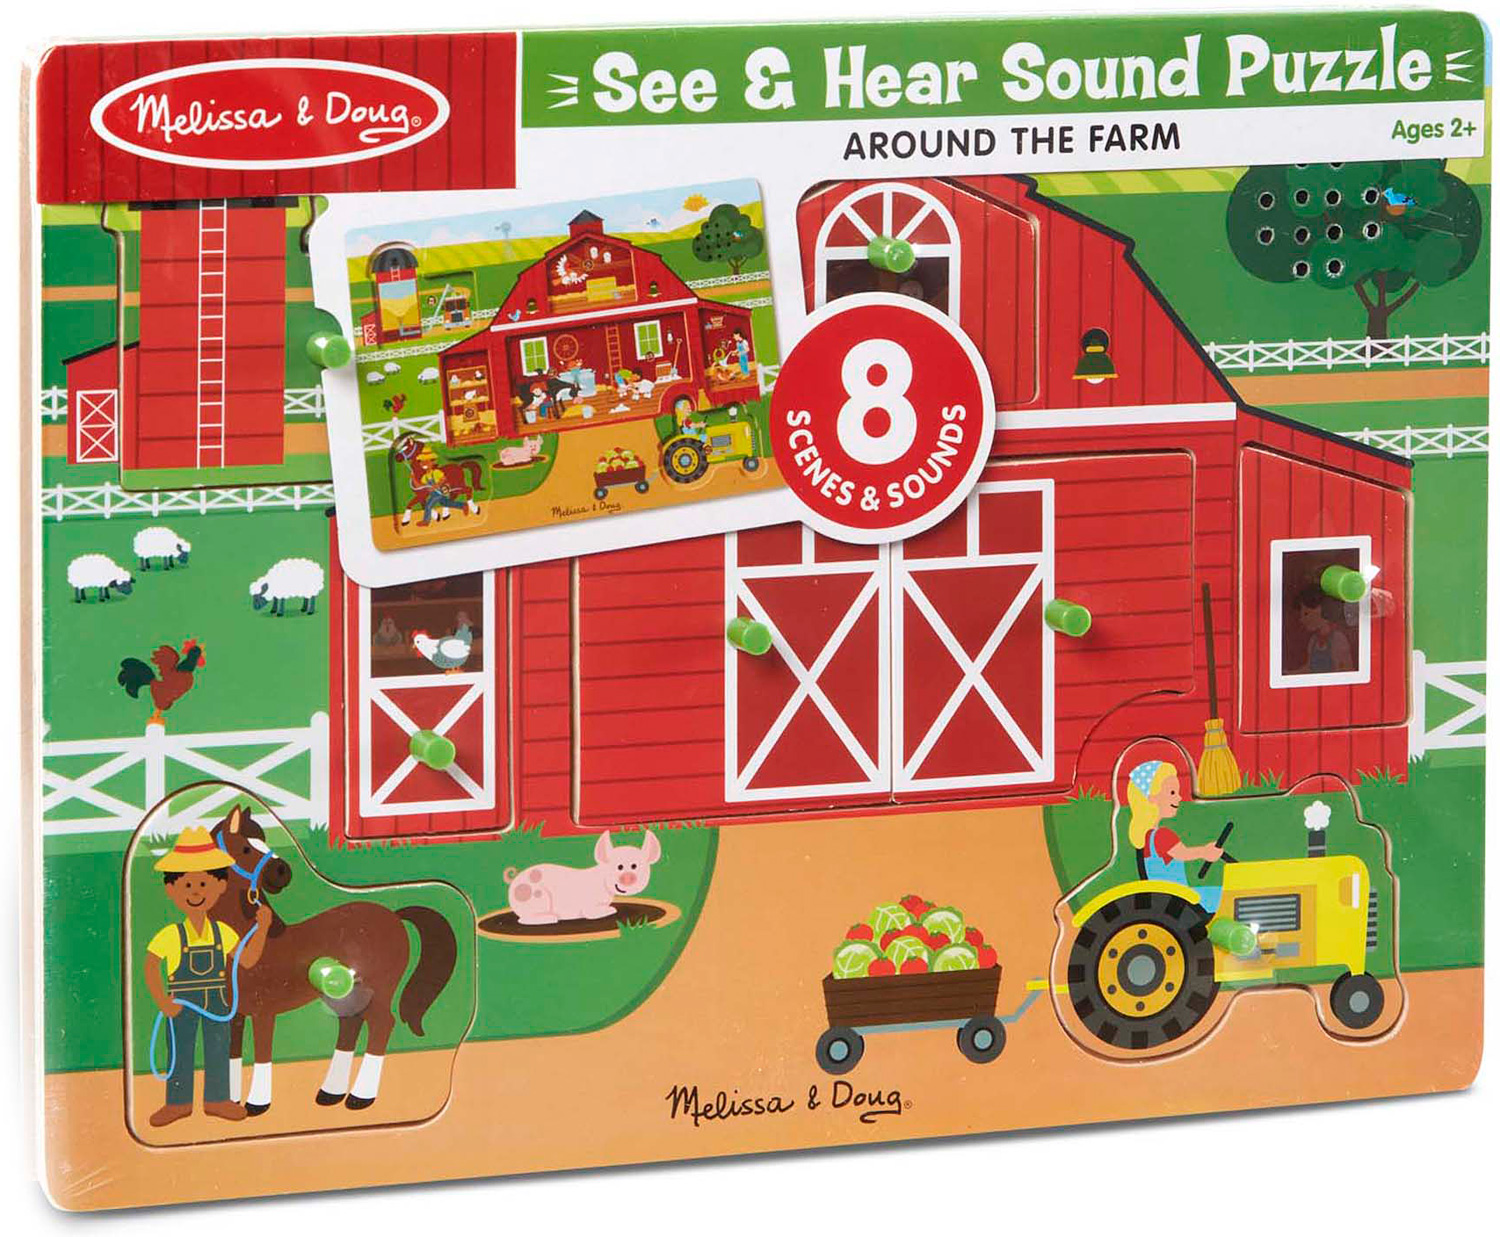 Around the Farm Melissa & DougSound Puzzle